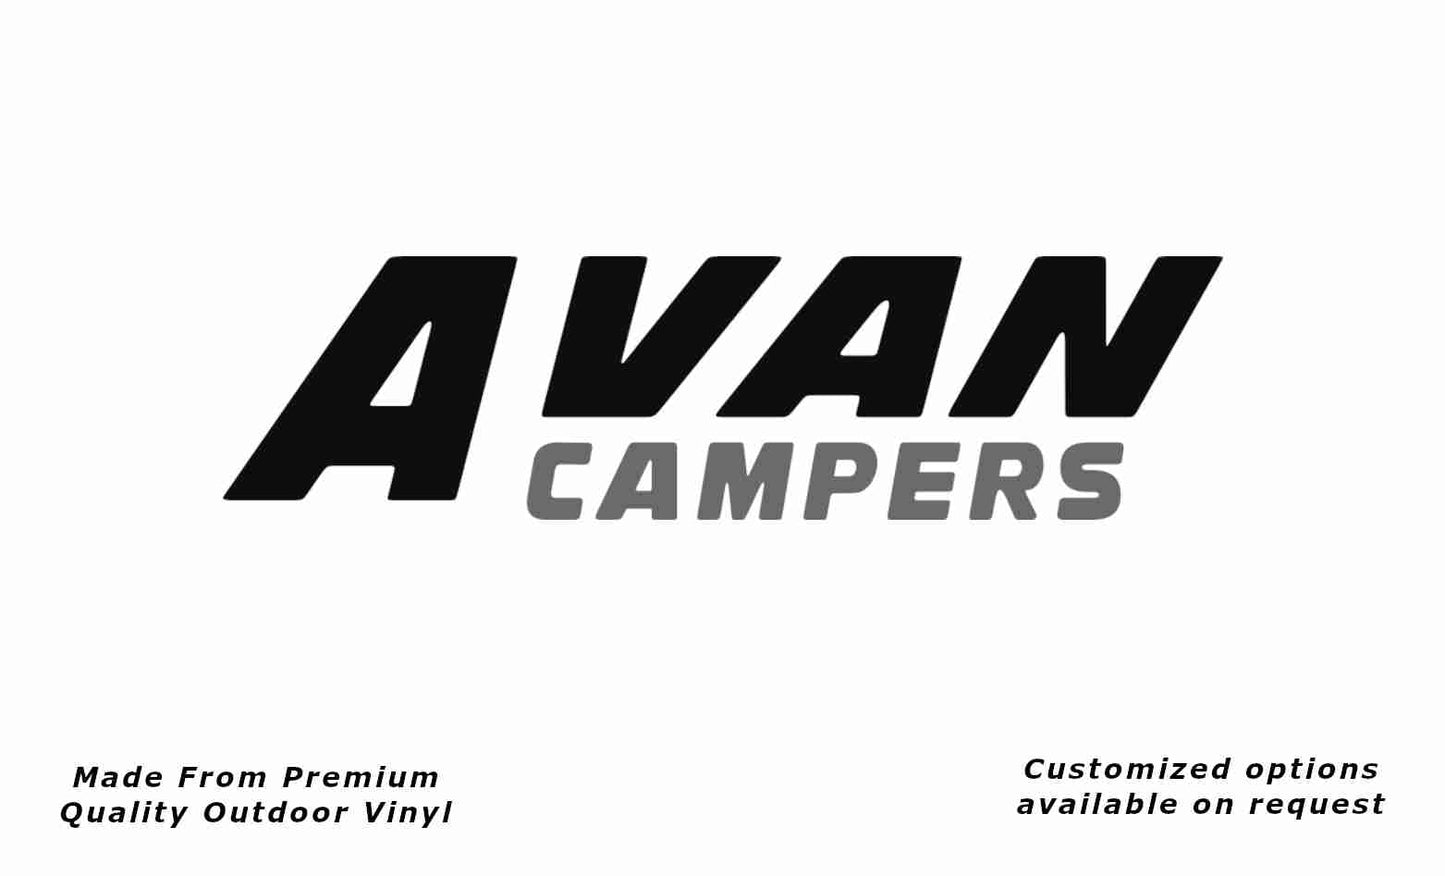 Avan campers caravan replacement vinyl decal sticker in black and silver grey.